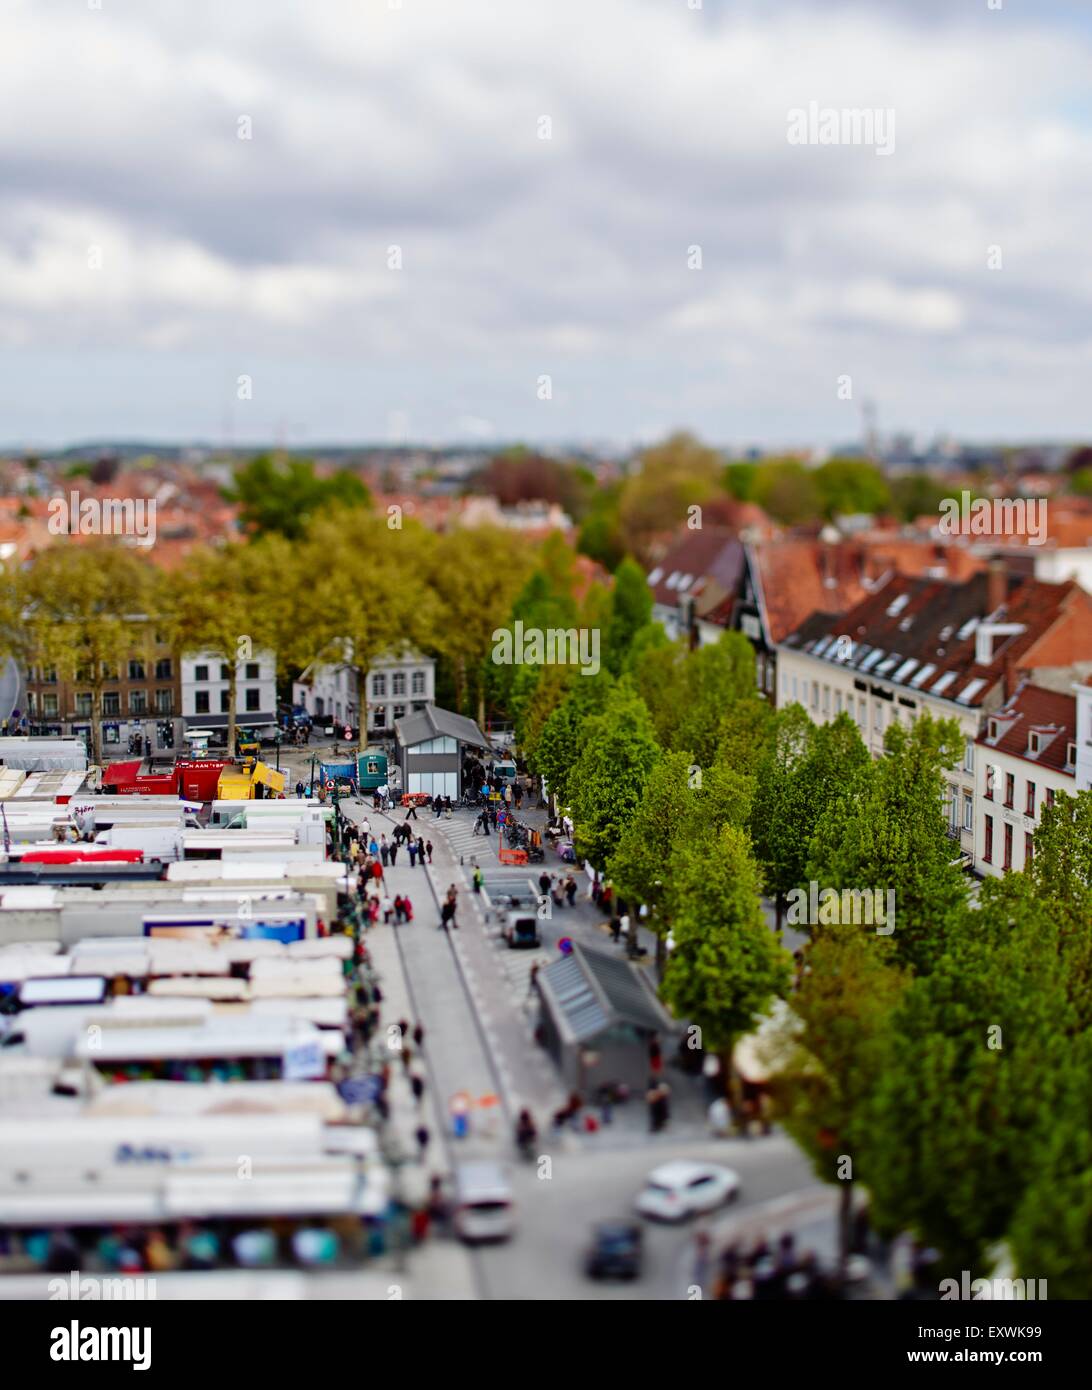 Market in Bruges, Belgium Stock Photo